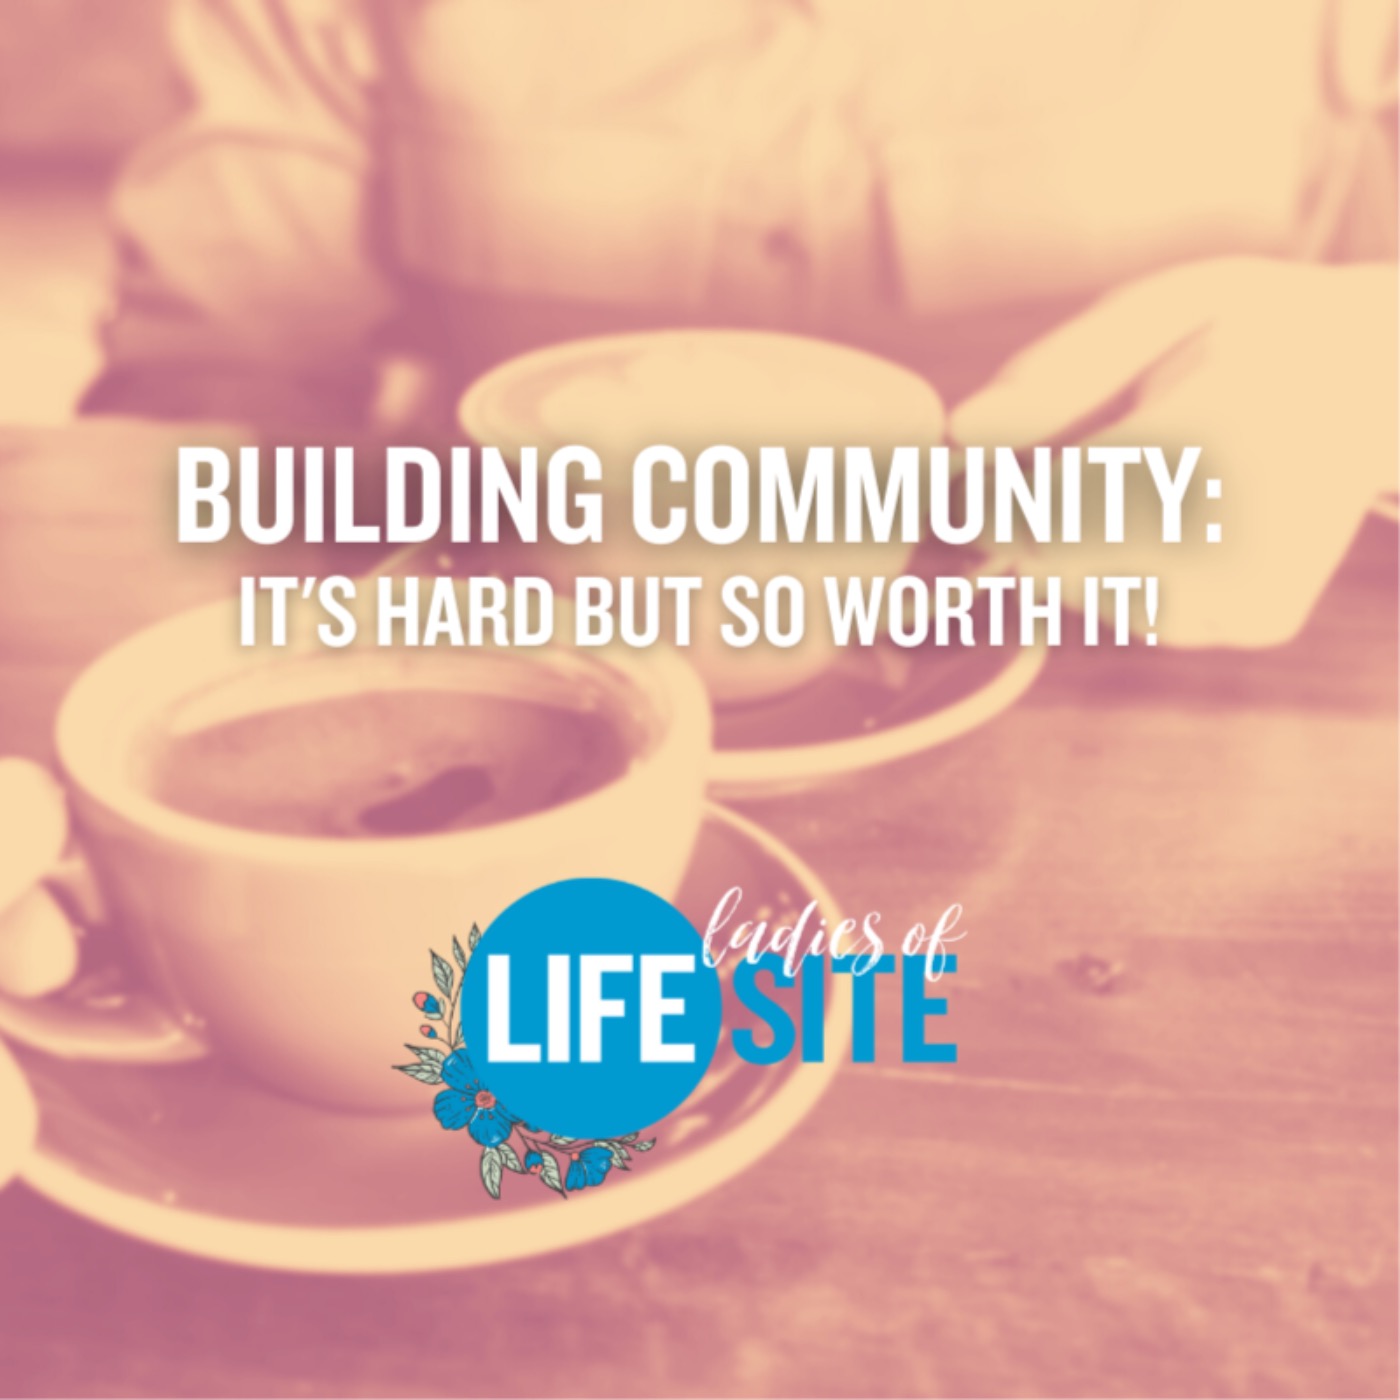 Building community: it’s hard but worth it